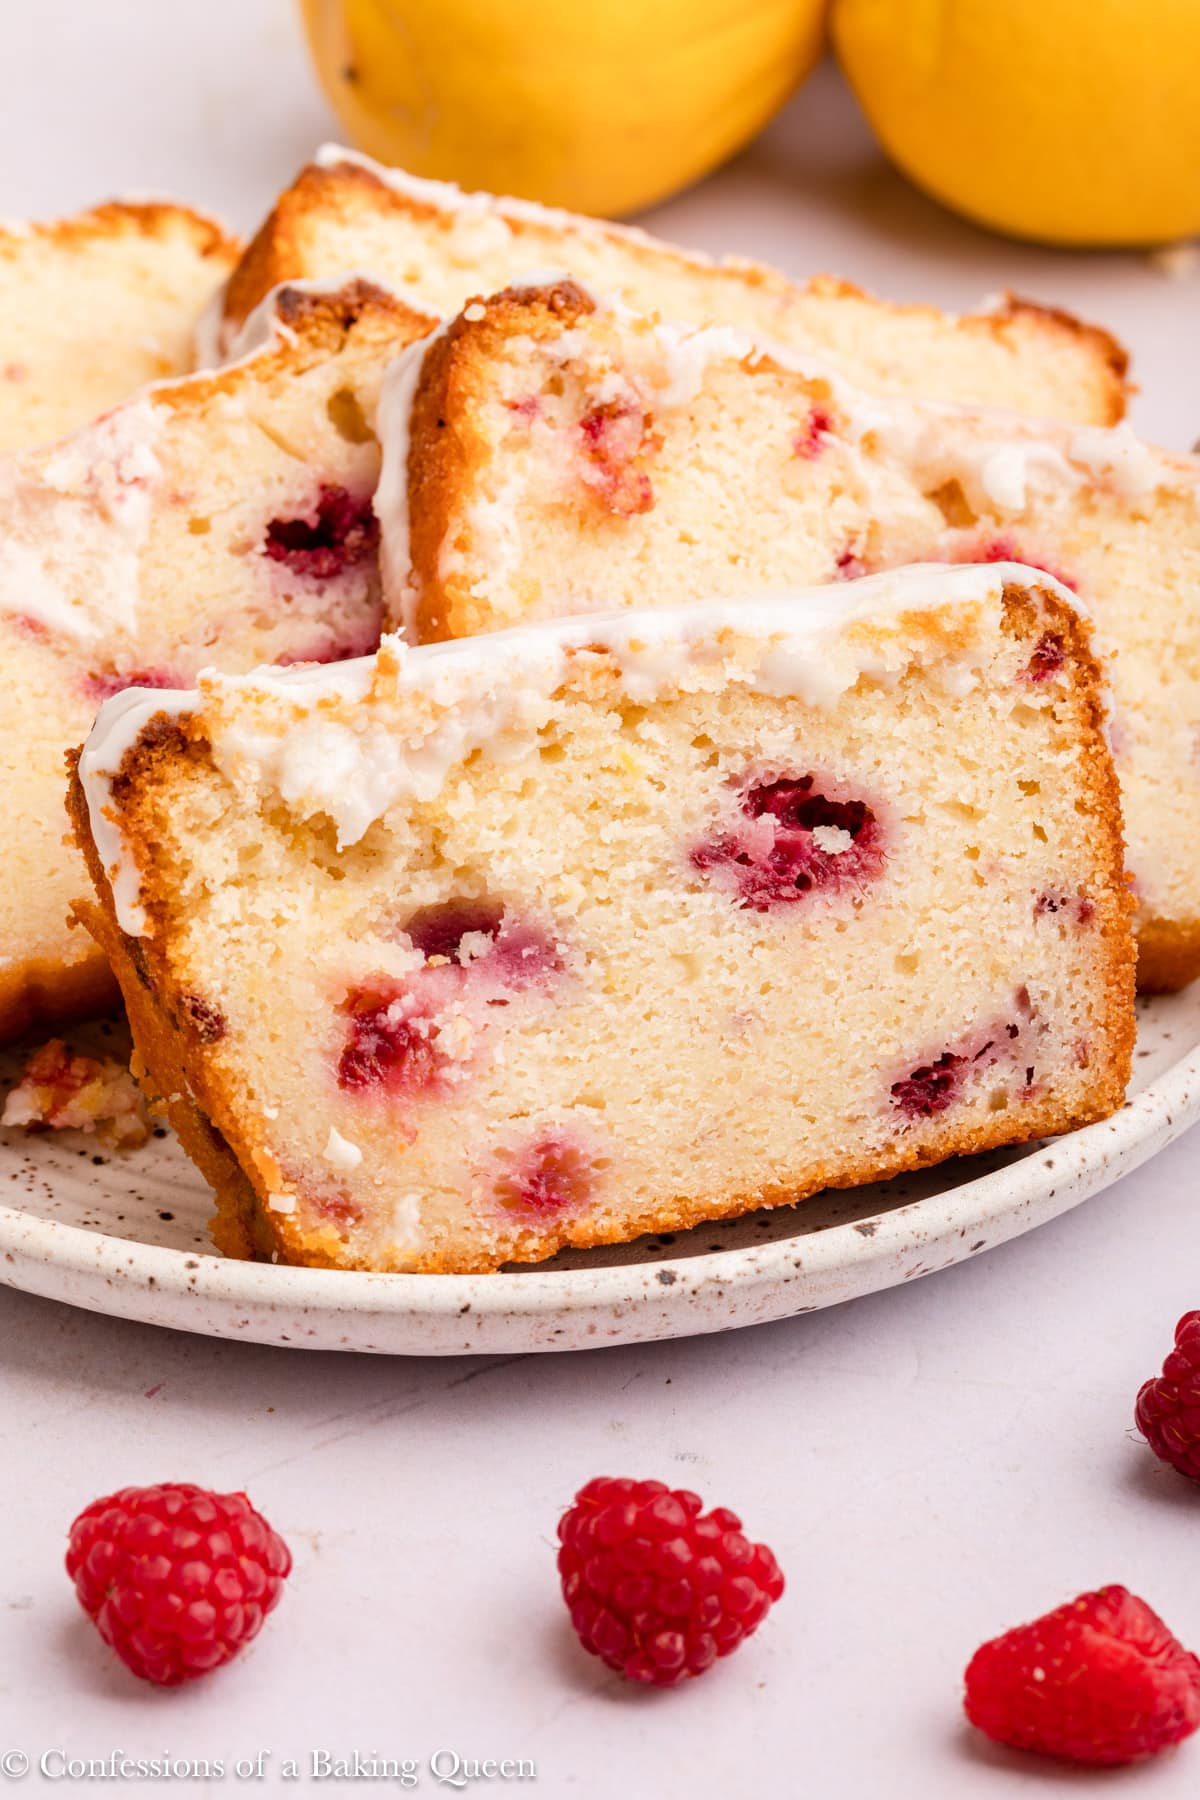 Slices of raspberry lemon loaf cake on a plate near fresh raspberries and lemons.